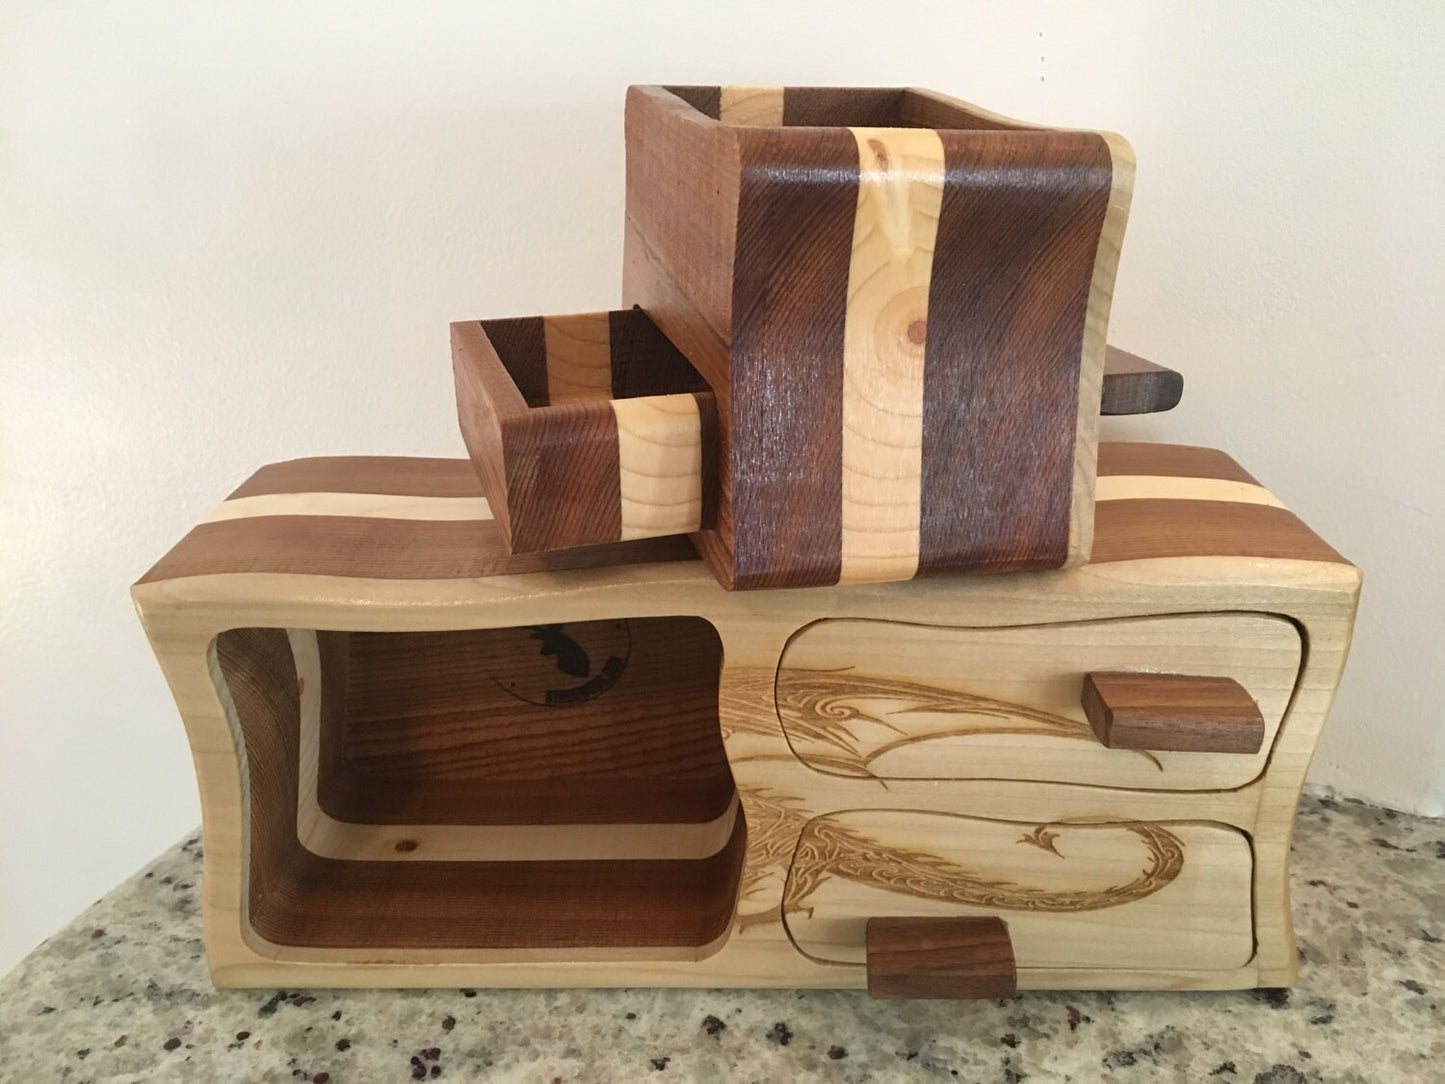 Solid Wood Box W/Drawers - Dragon, Jewelry Box, Handcrafted, Custom Box, Personalized Box, Handmade, Box, Home Decor, Engraved, Stash Box